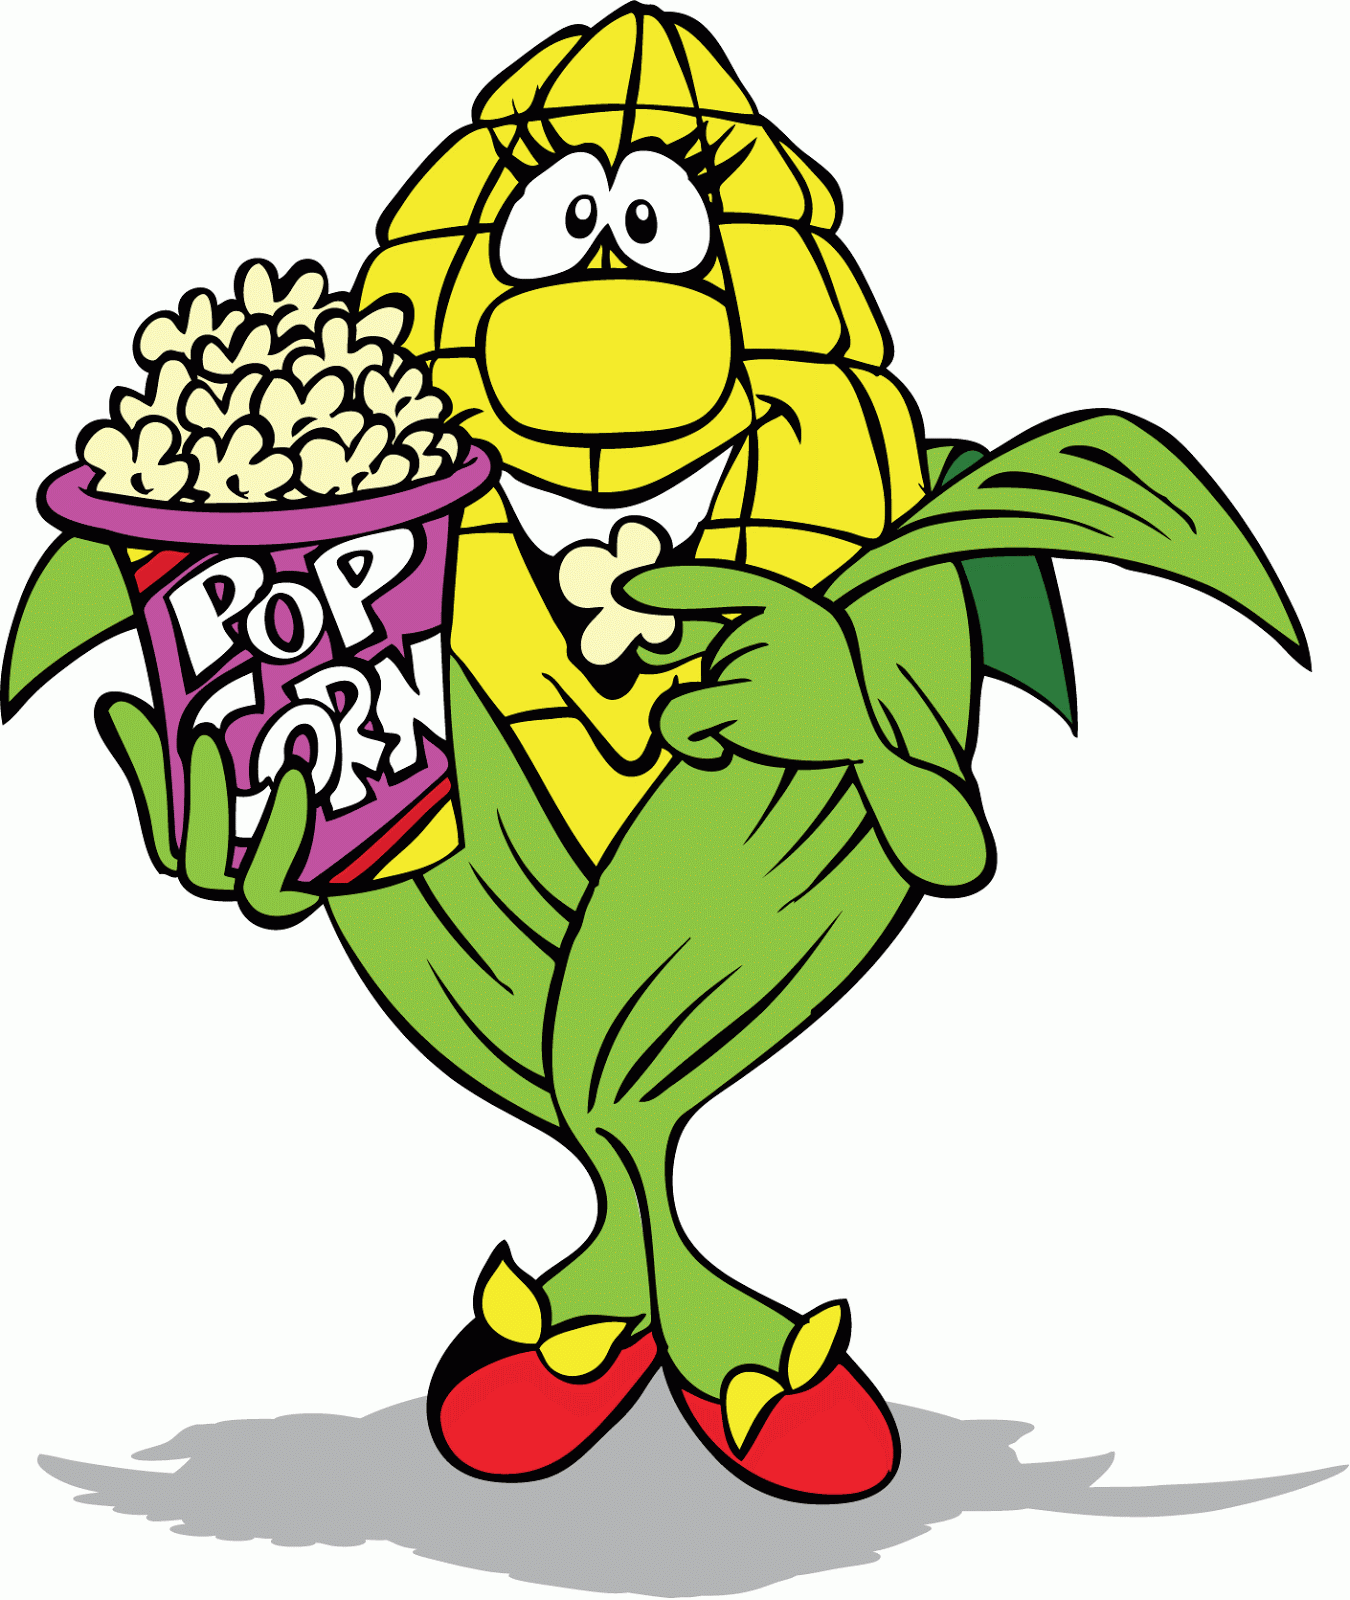 Cartoon Popcorn Images & Pictures - Becuo